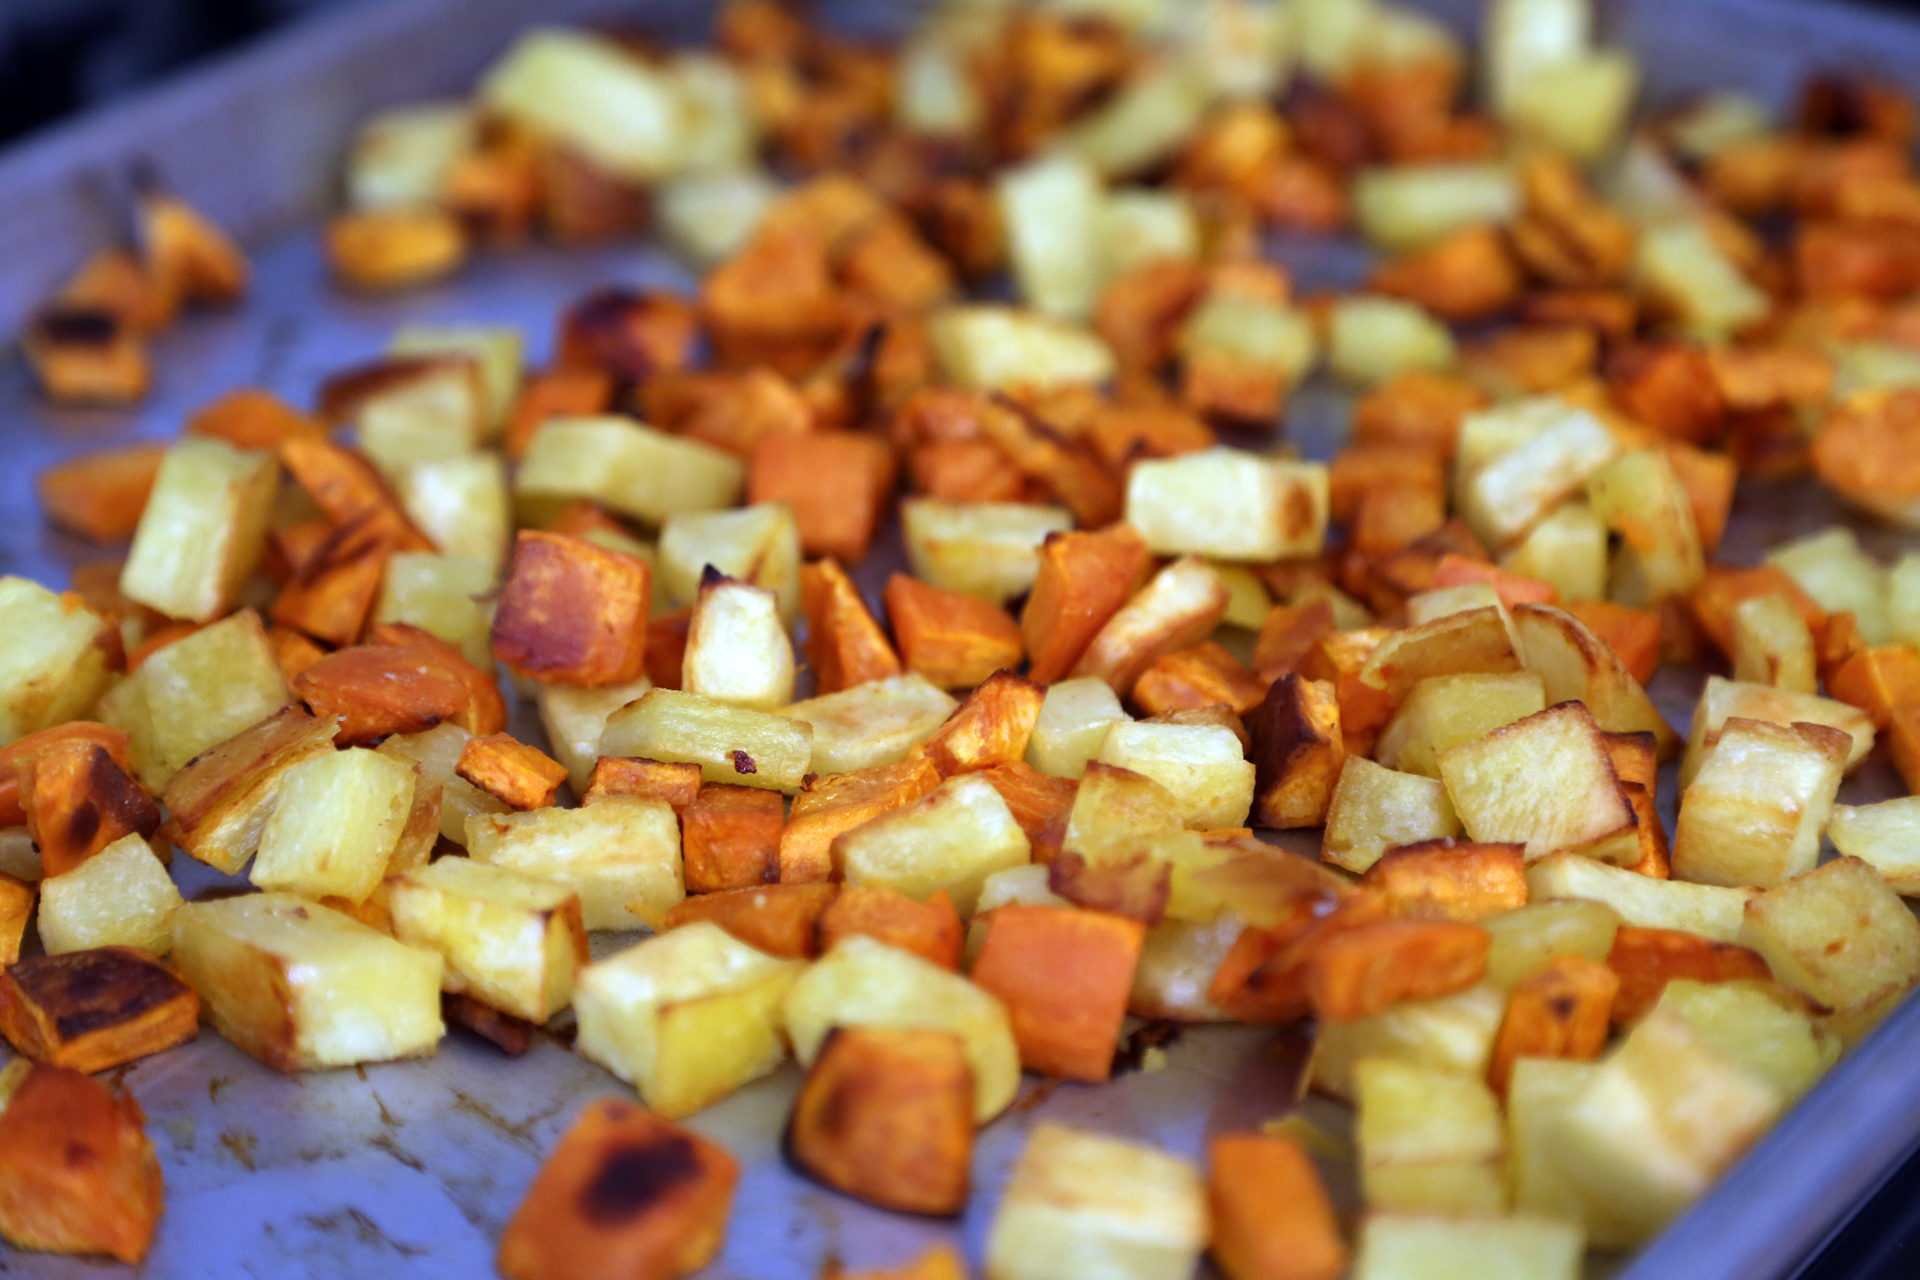 Roast the potatoes until tender and brown.